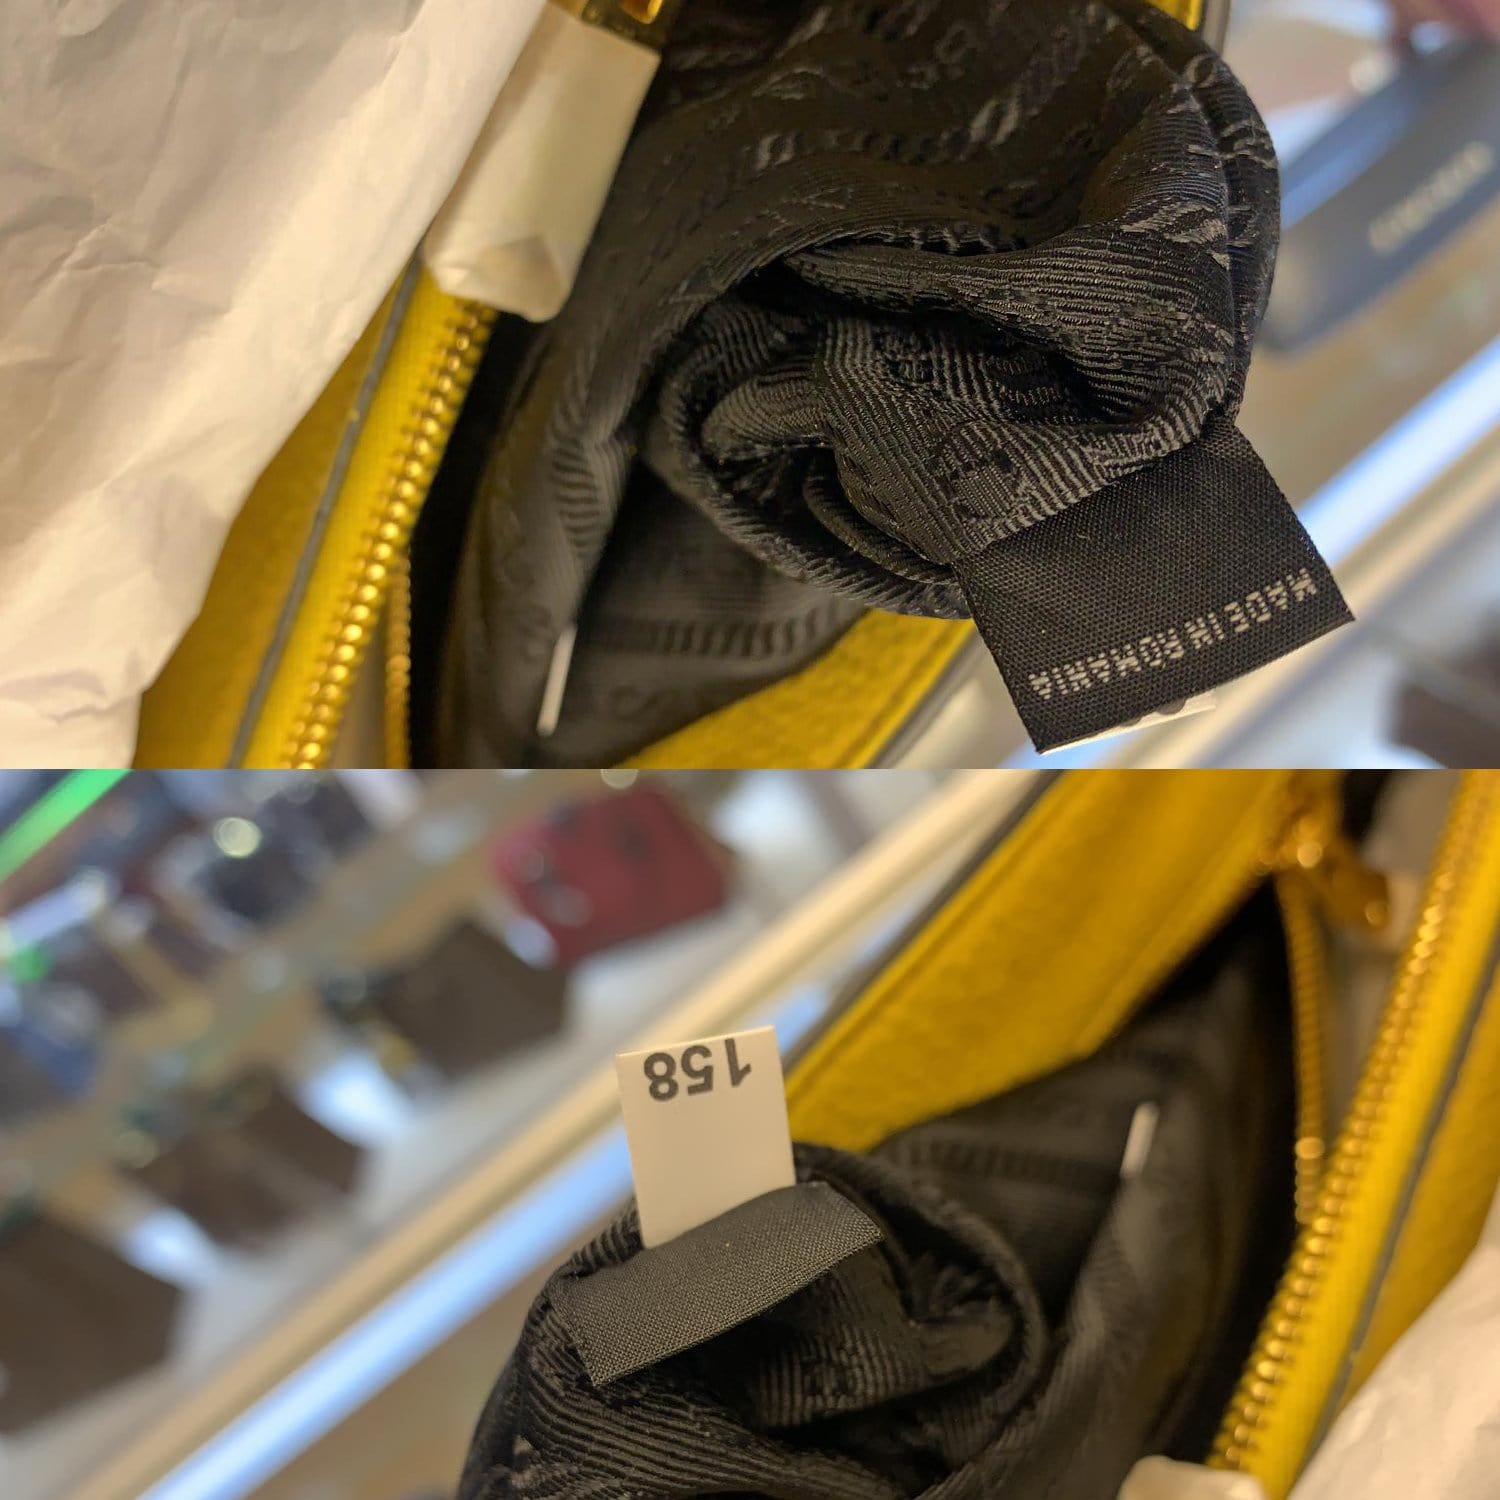 Yellow Prada Vitello Phenix Camera Bag – Designer Revival